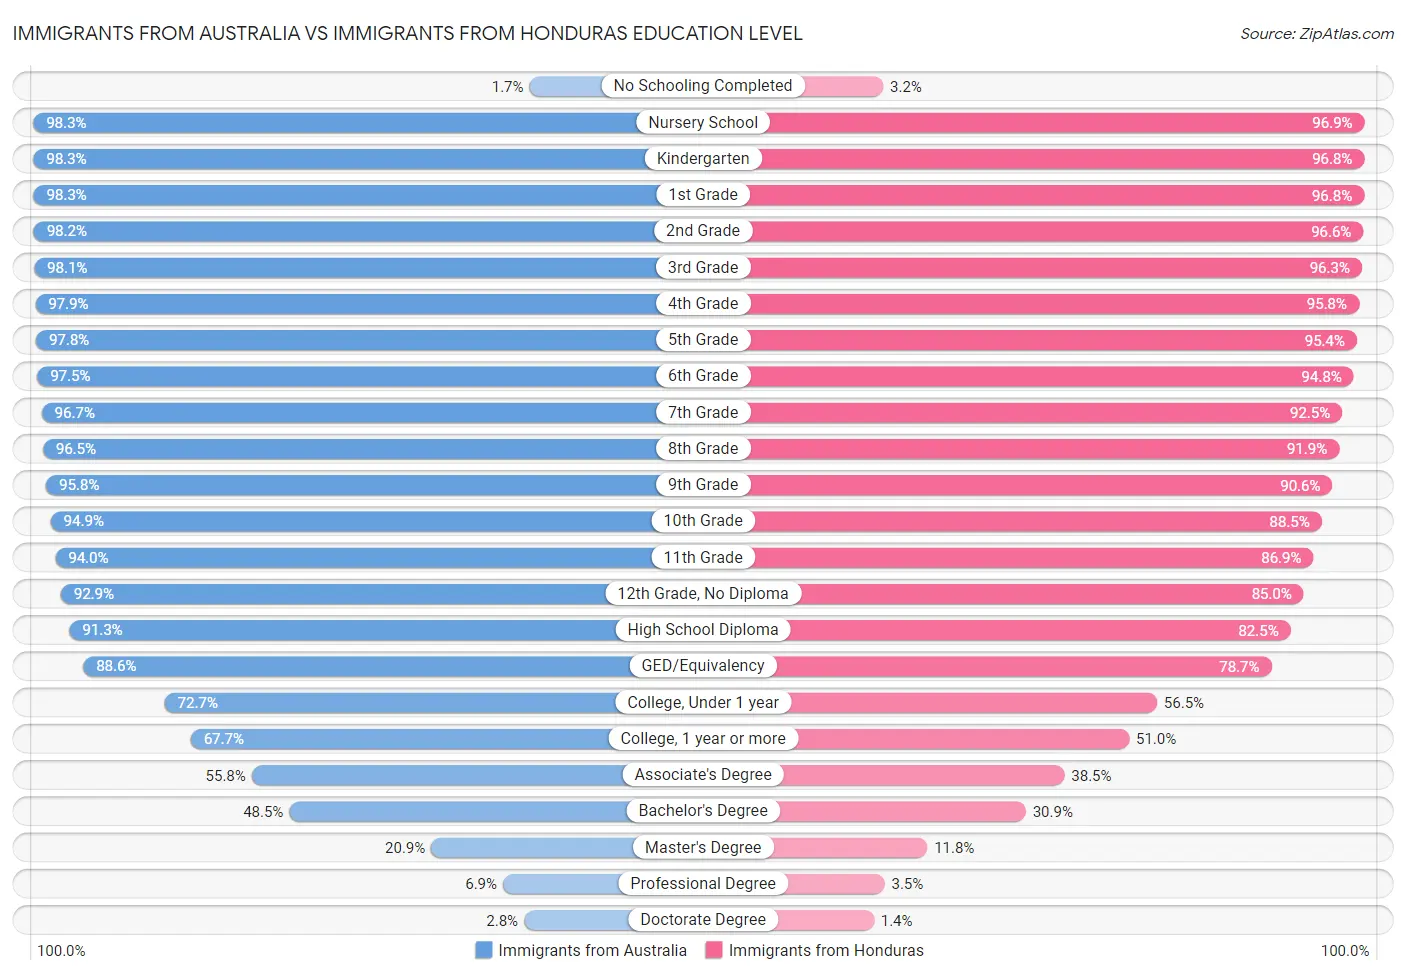 Immigrants from Australia vs Immigrants from Honduras Education Level